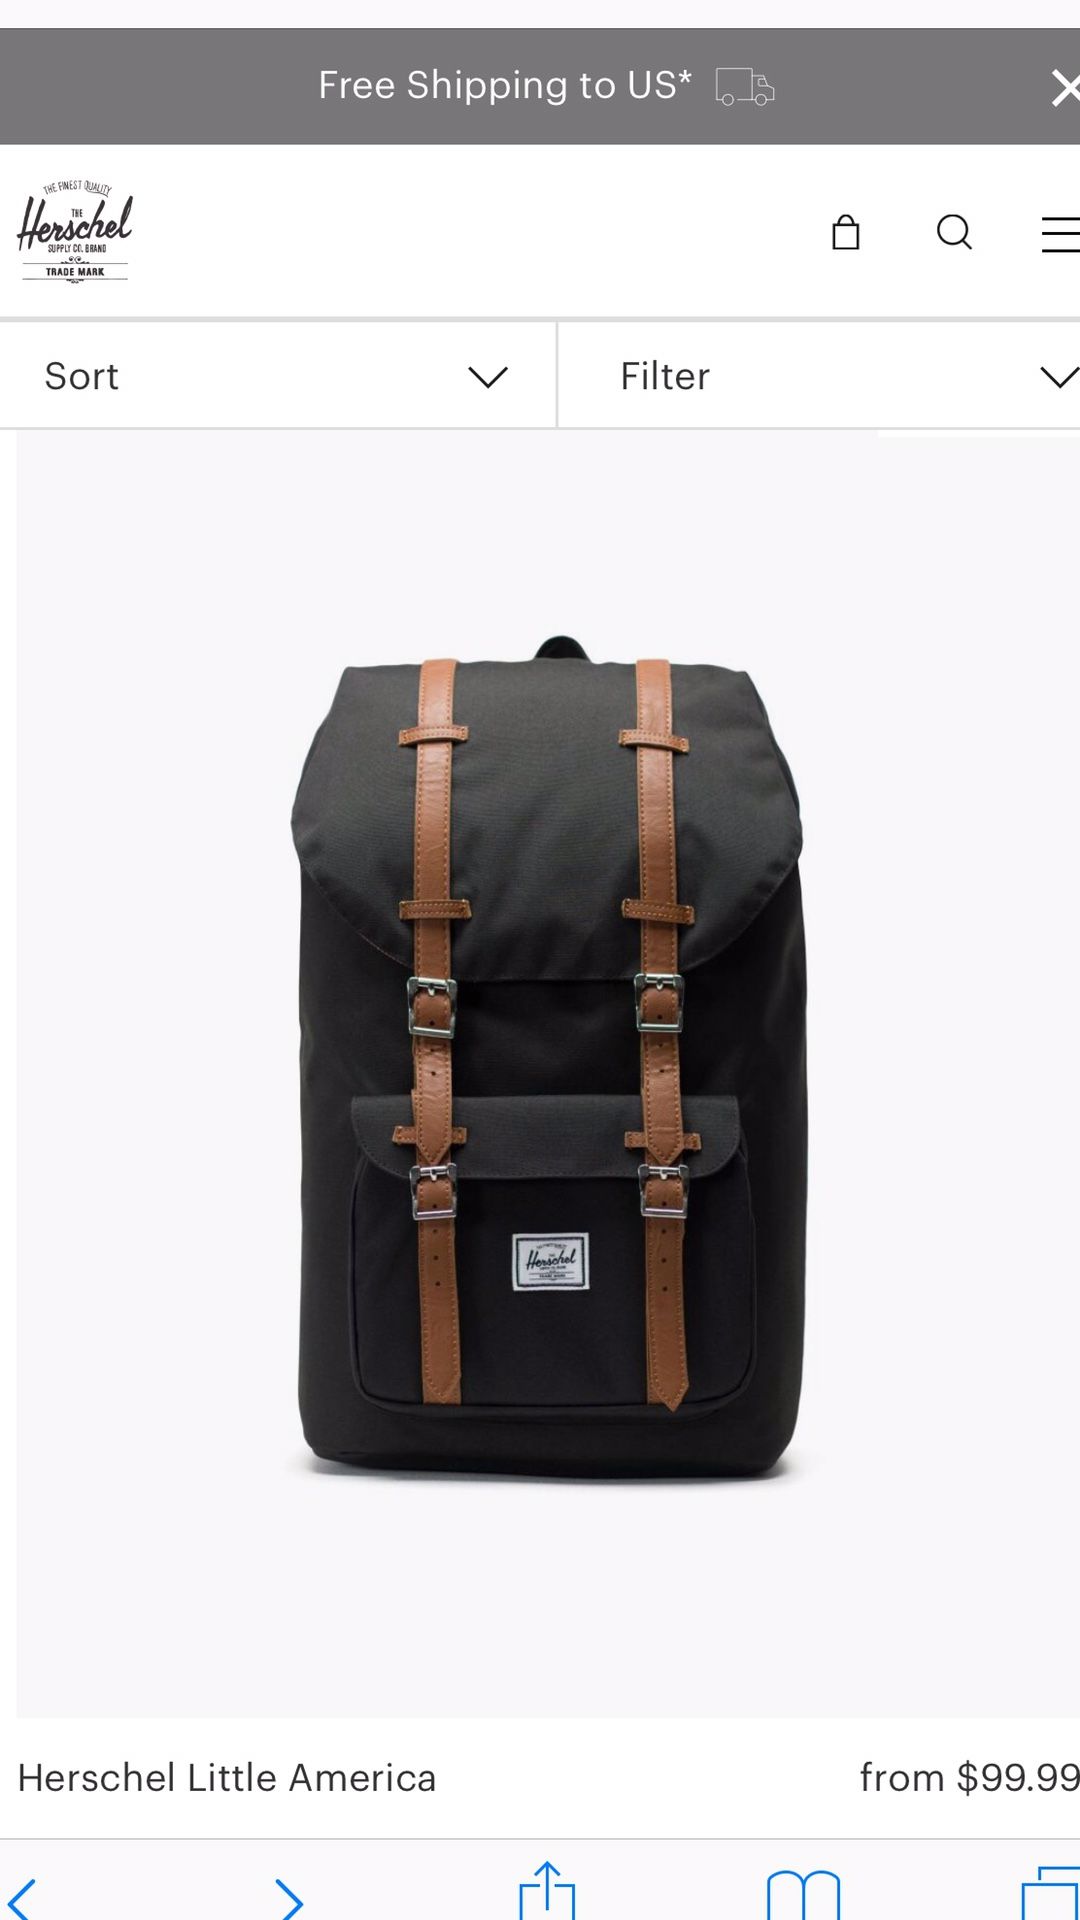 HERSHEL (authentic) brand Little America Backpack